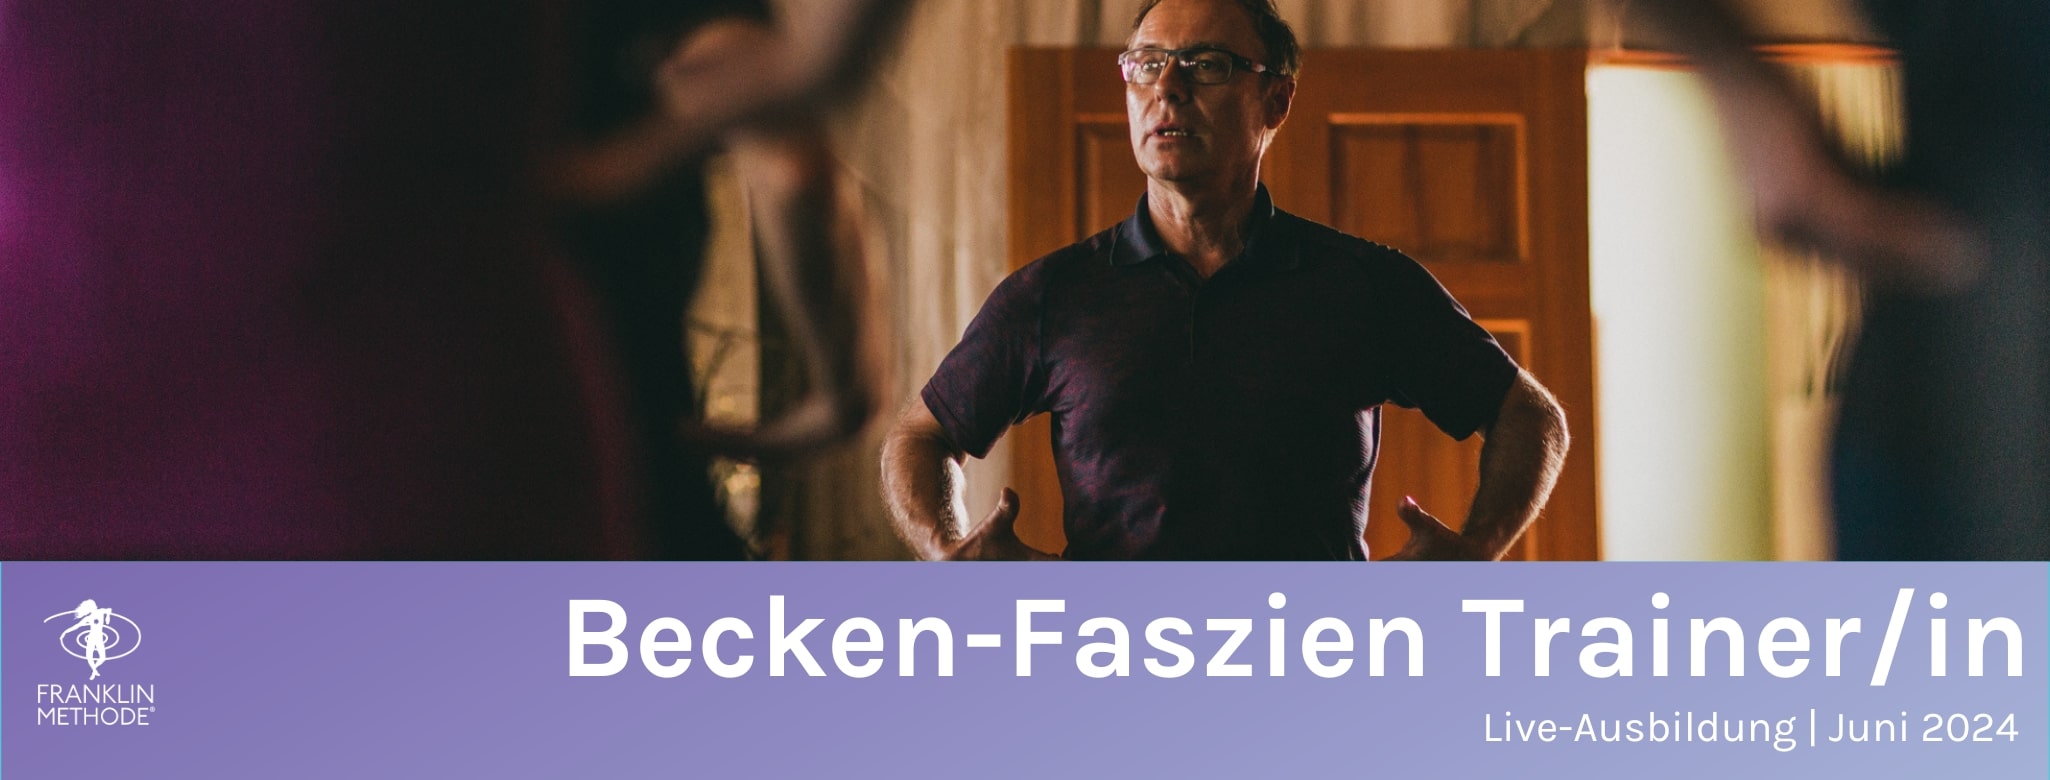 trainer-becken-faszien-2024-banner